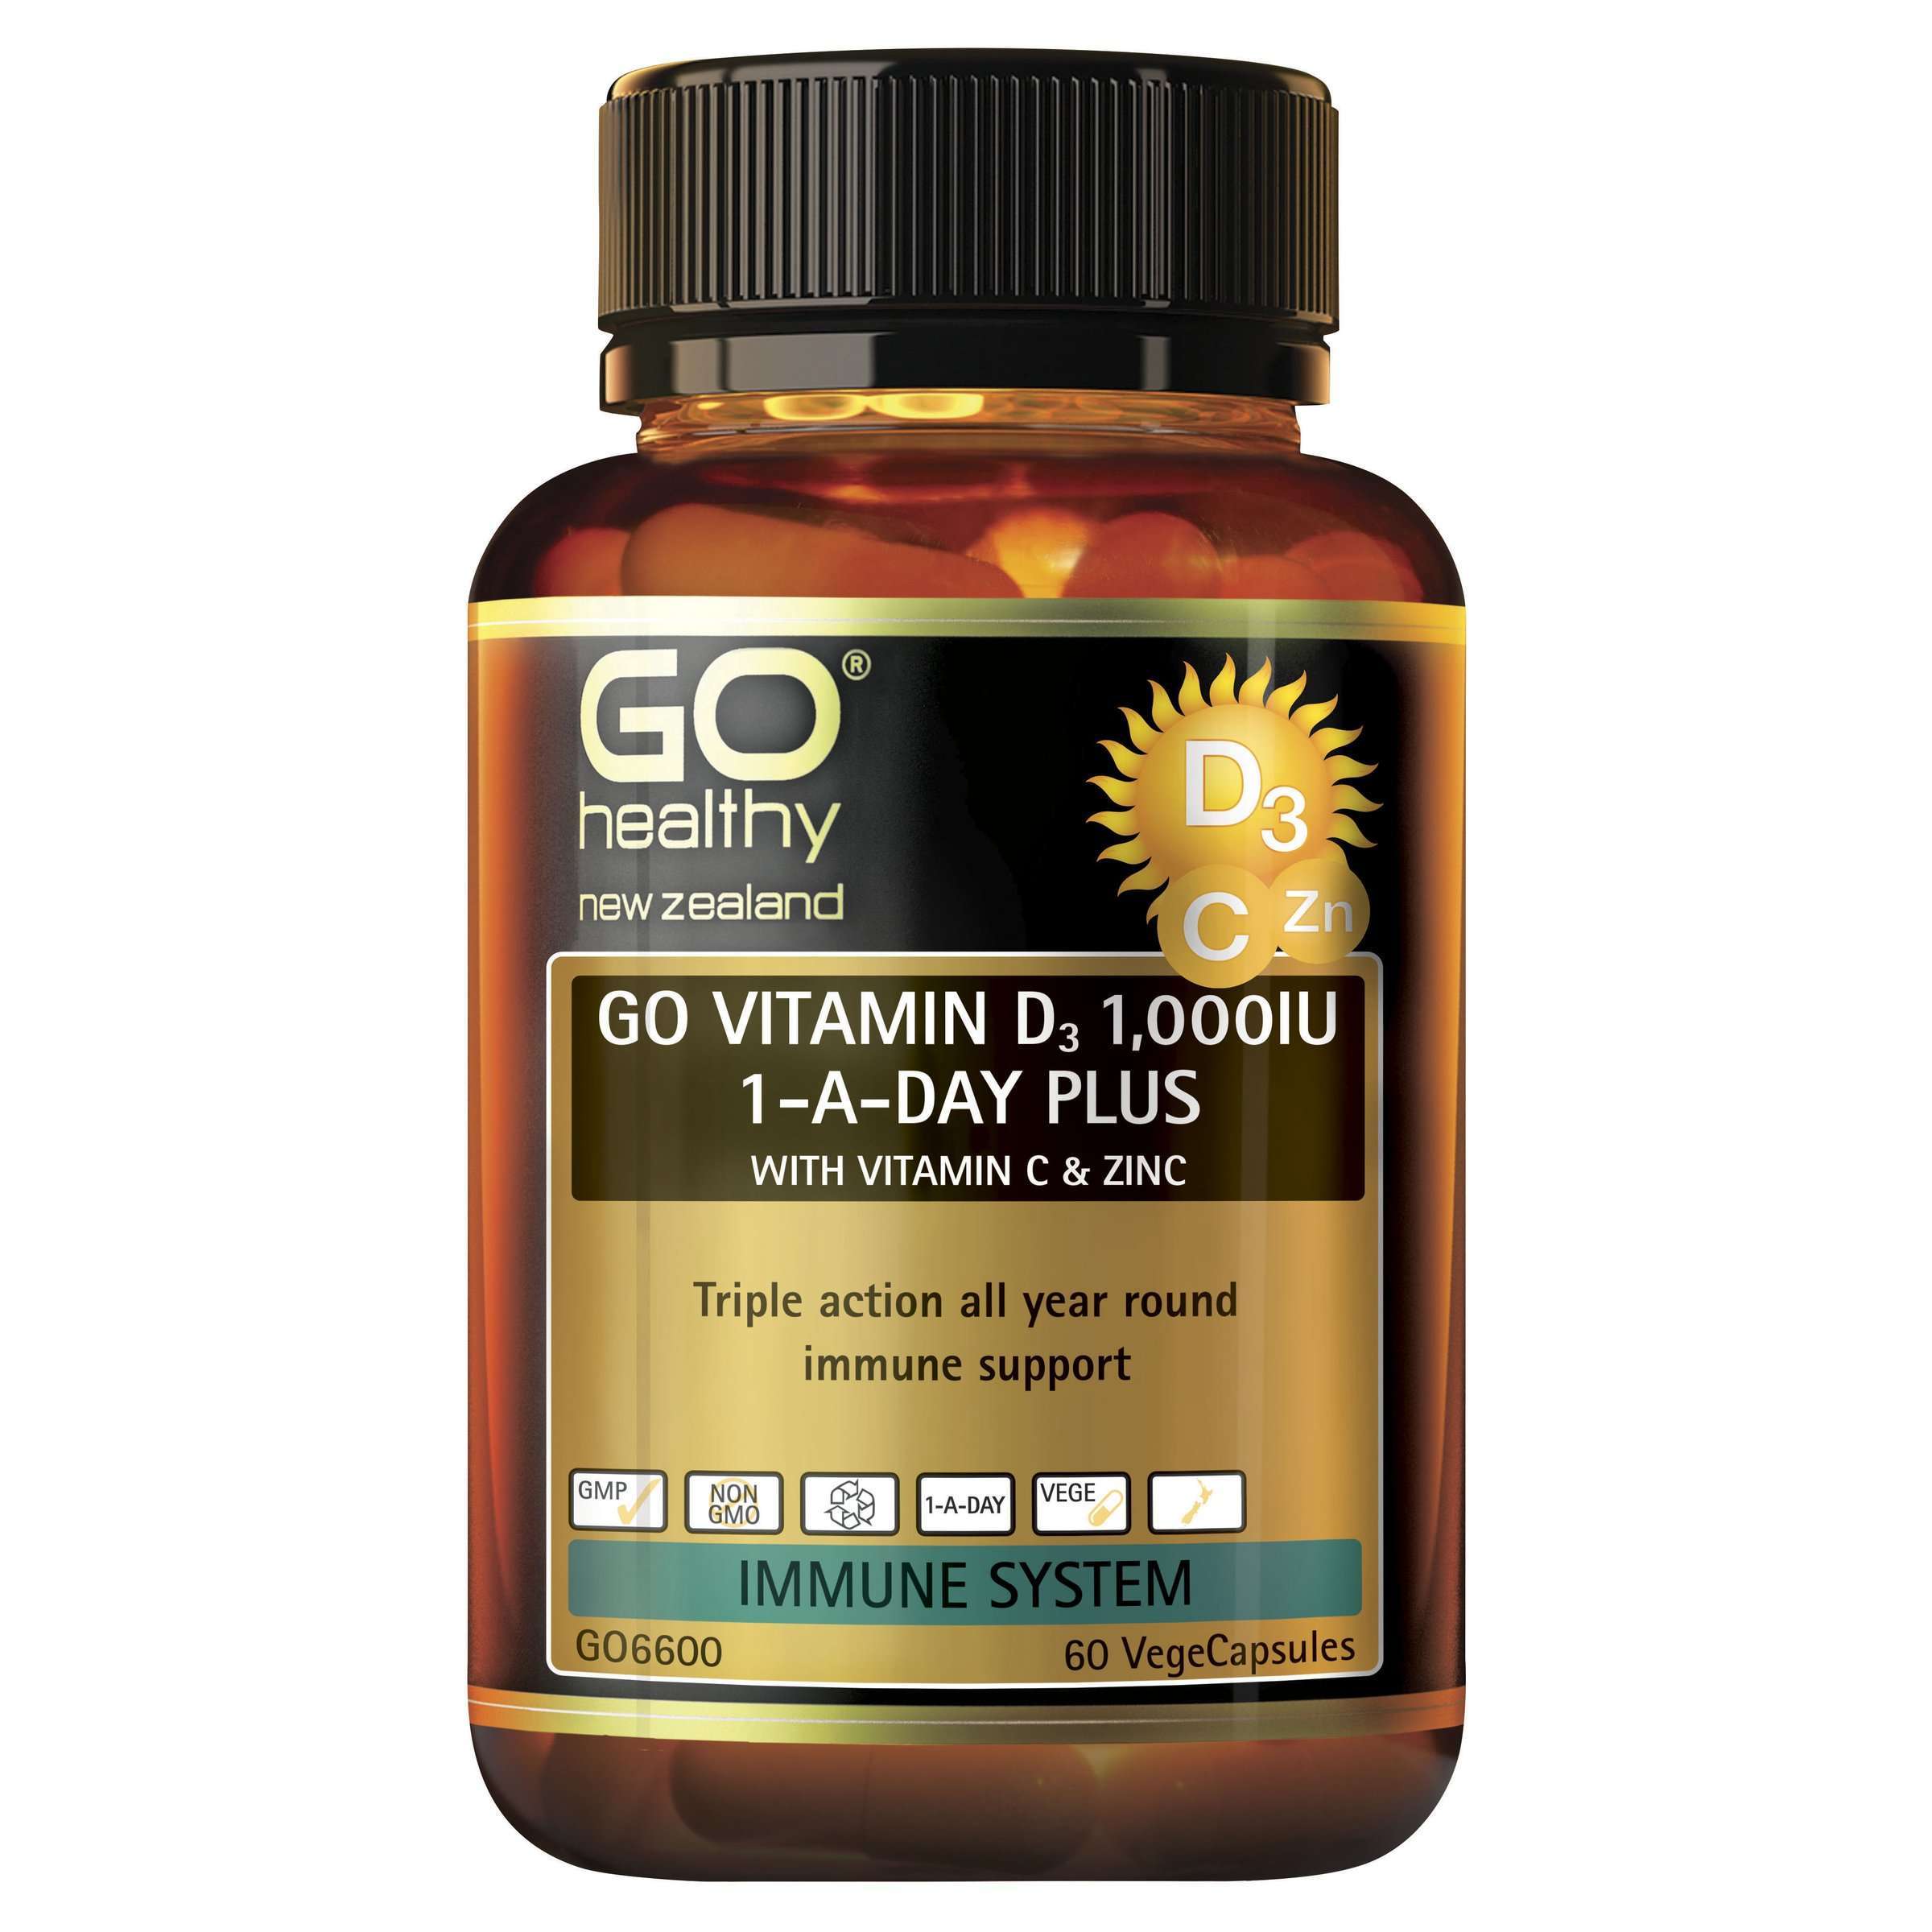 Go Healthy Go Vitamin D3 1,000IU 1-A-Day Plus